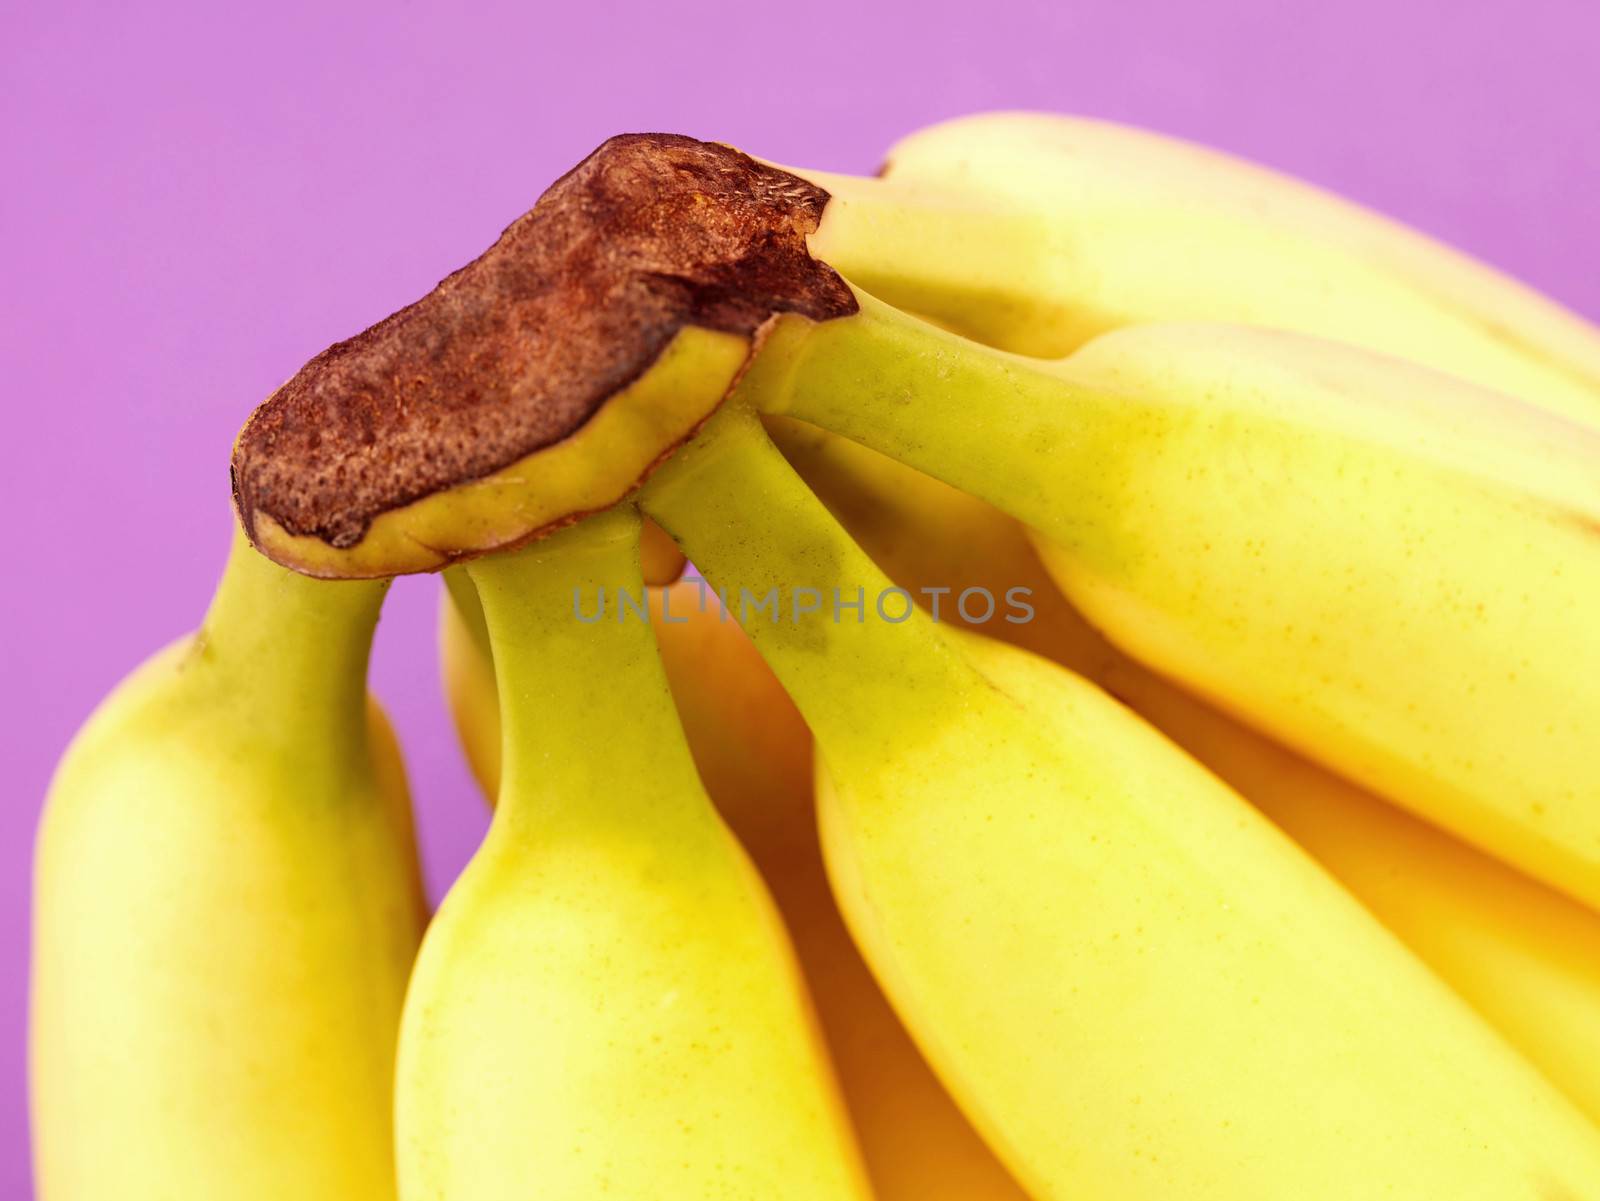 Bananas by Whiteboxmedia